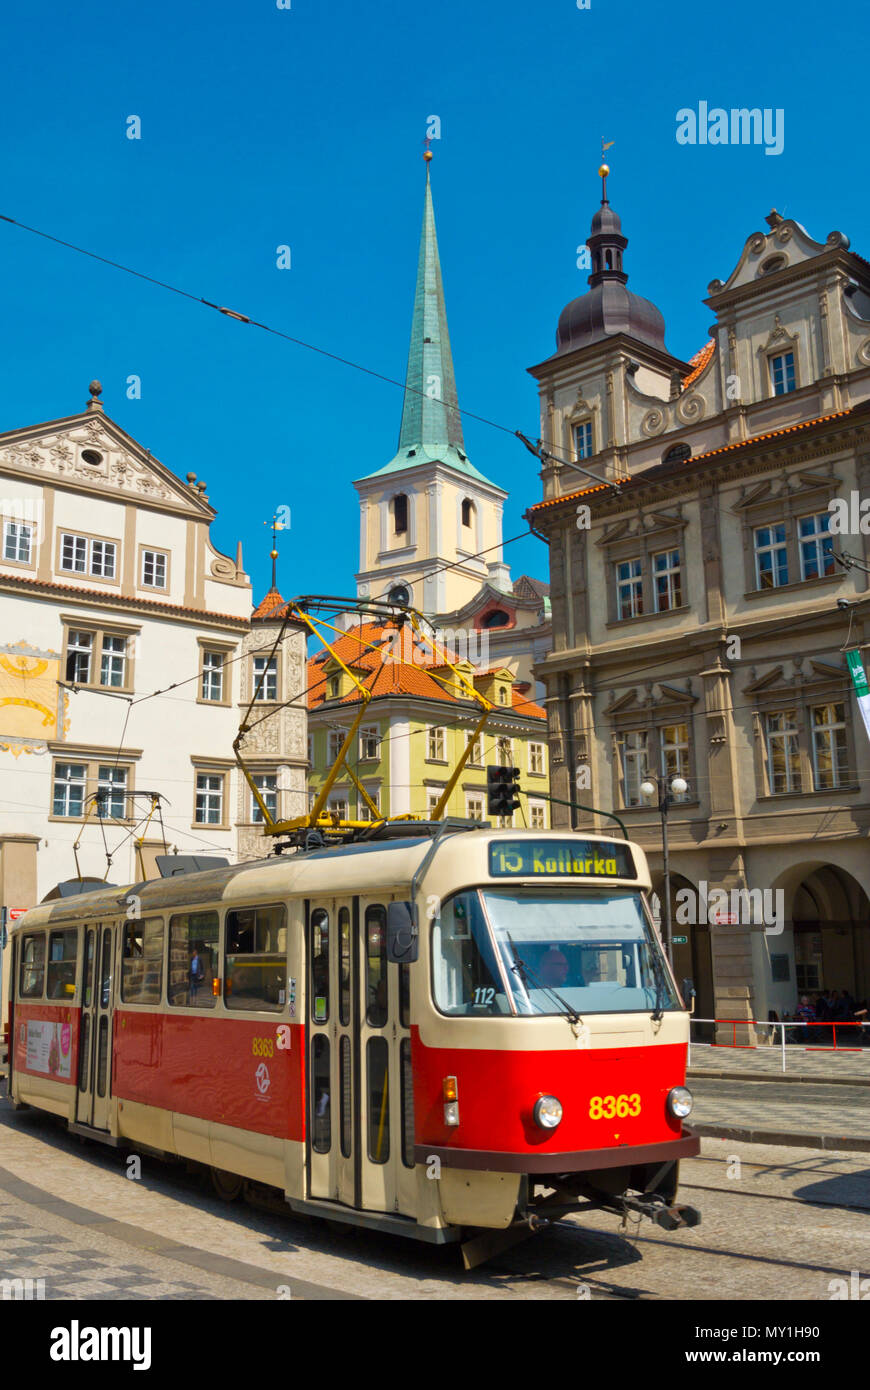 Tram, Malostranske namesti, Mala Strana, Prague, Czech Republic Stock Photo